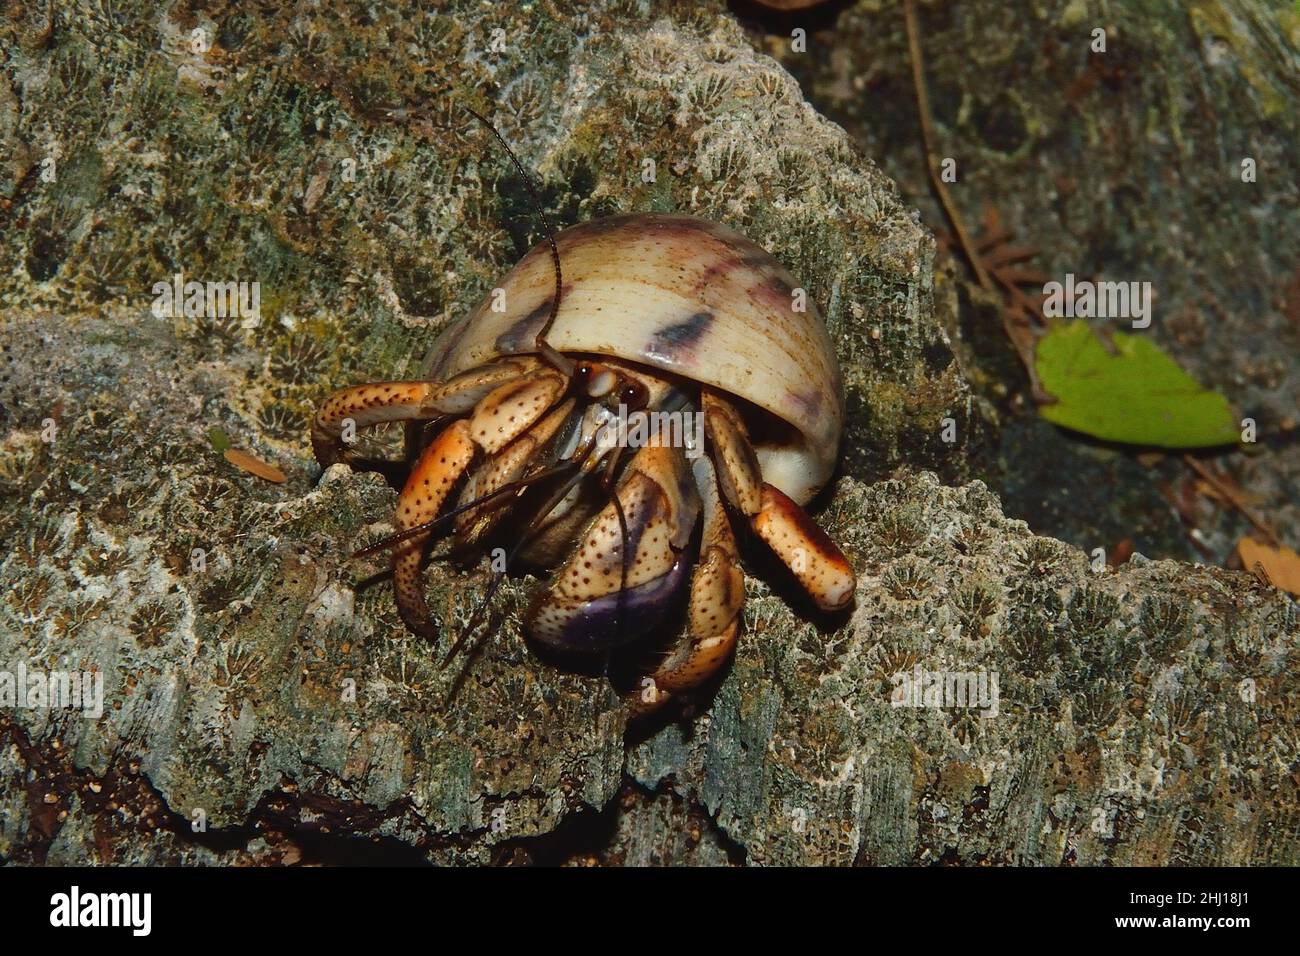 Karibik-Einsiedlerkrebs, Karibik-Landeinsiedlerkrebs, Caribbean hermit crab, Coenobita clypeatus, Curacao Stock Photo